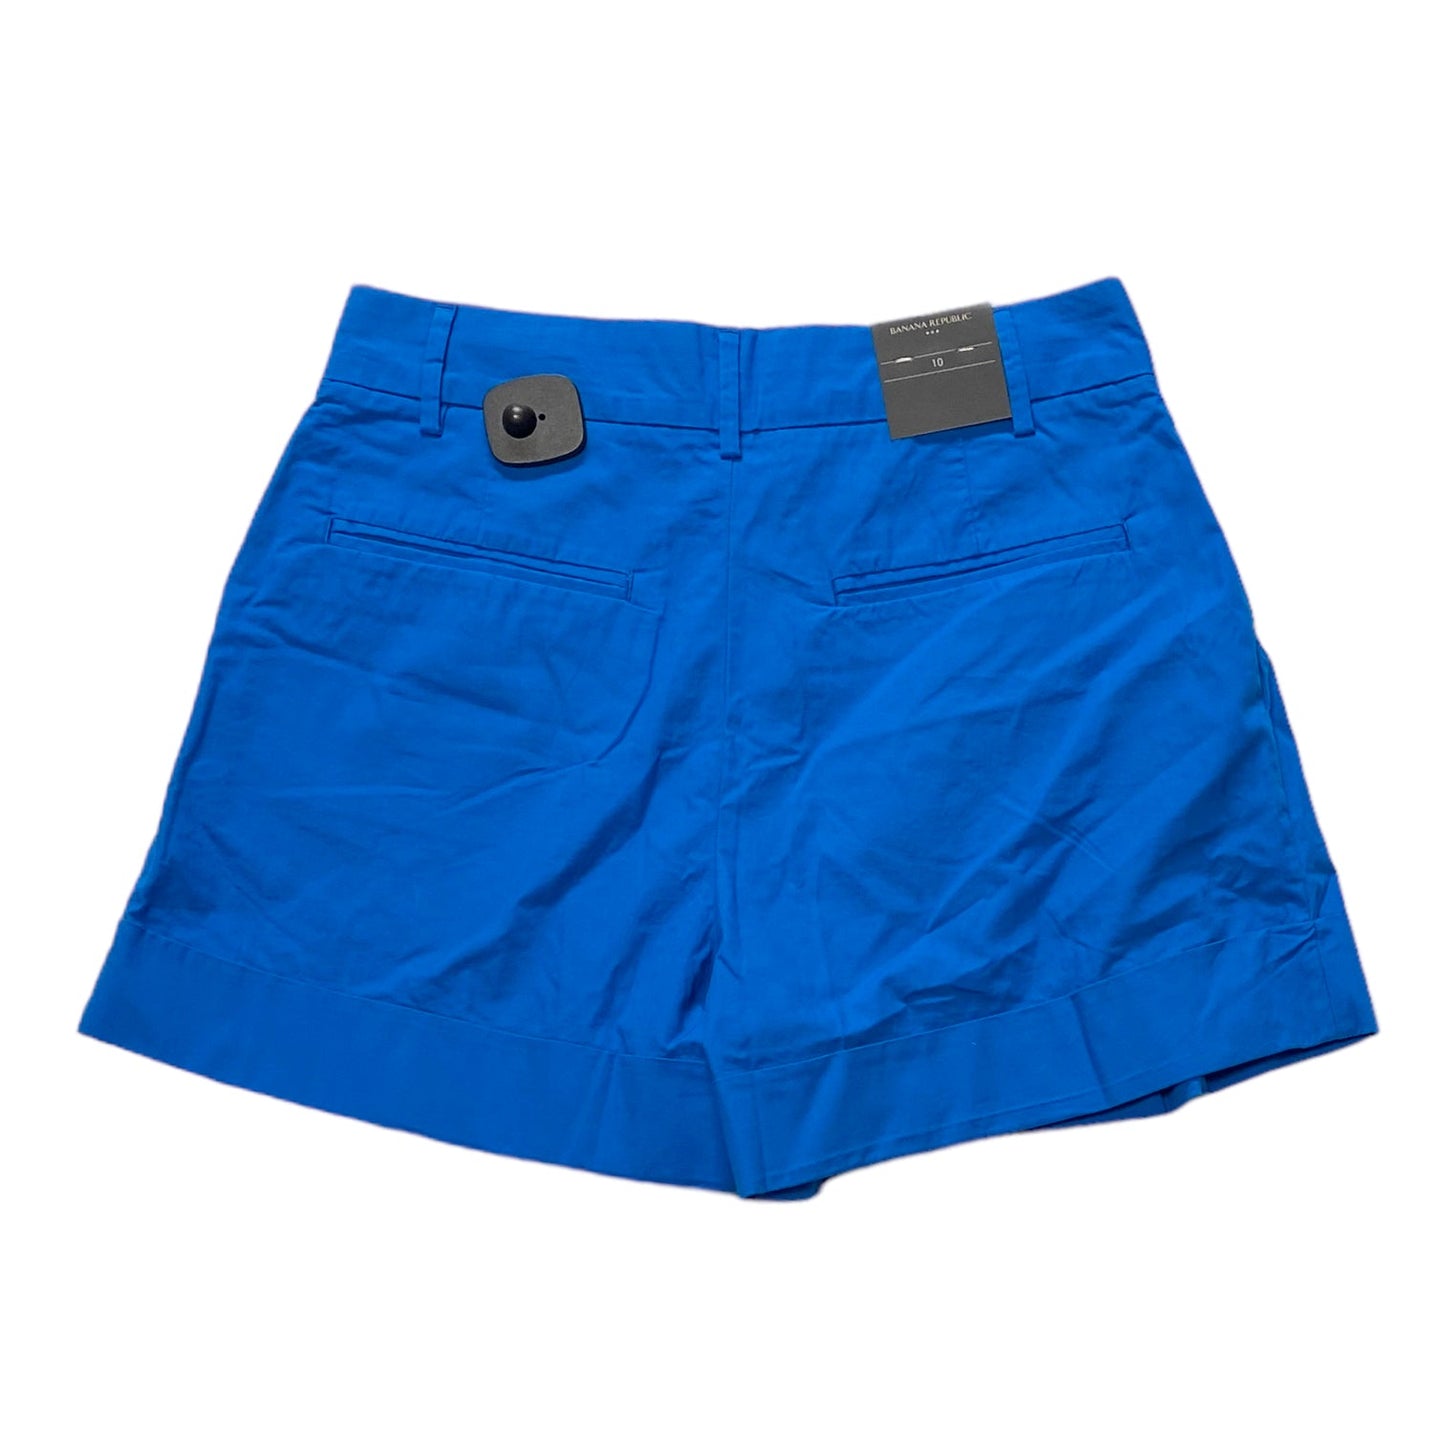 Blue Shorts Banana Republic, Size 10